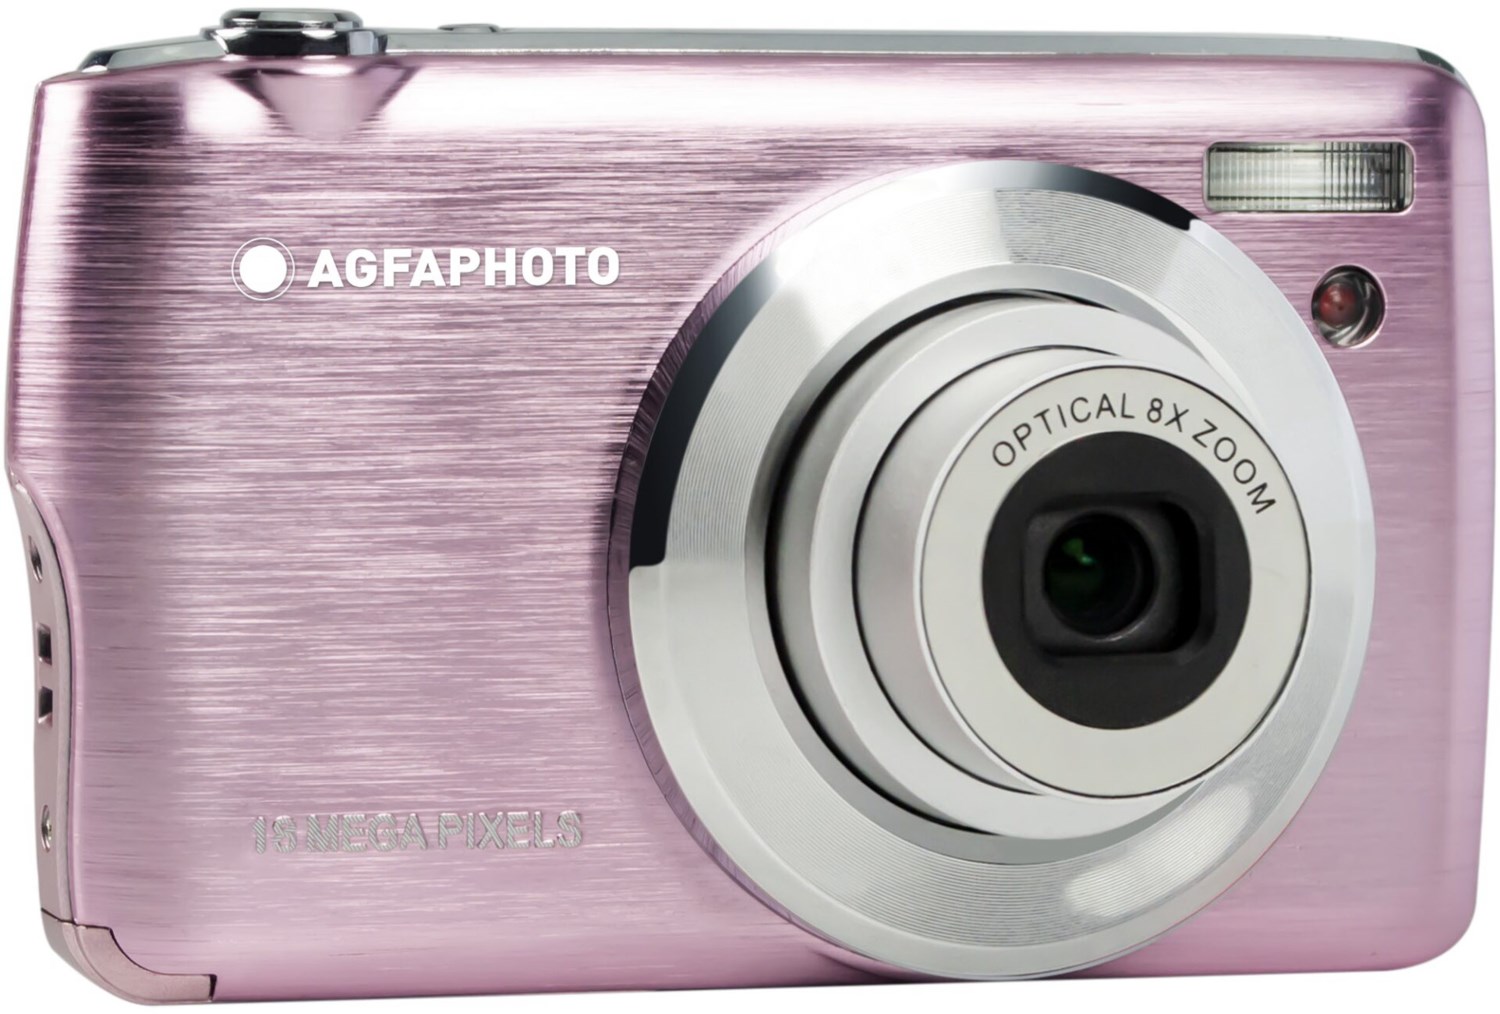 Realishot DC8200 Digitale Kompaktkamera pink von Agfaphoto